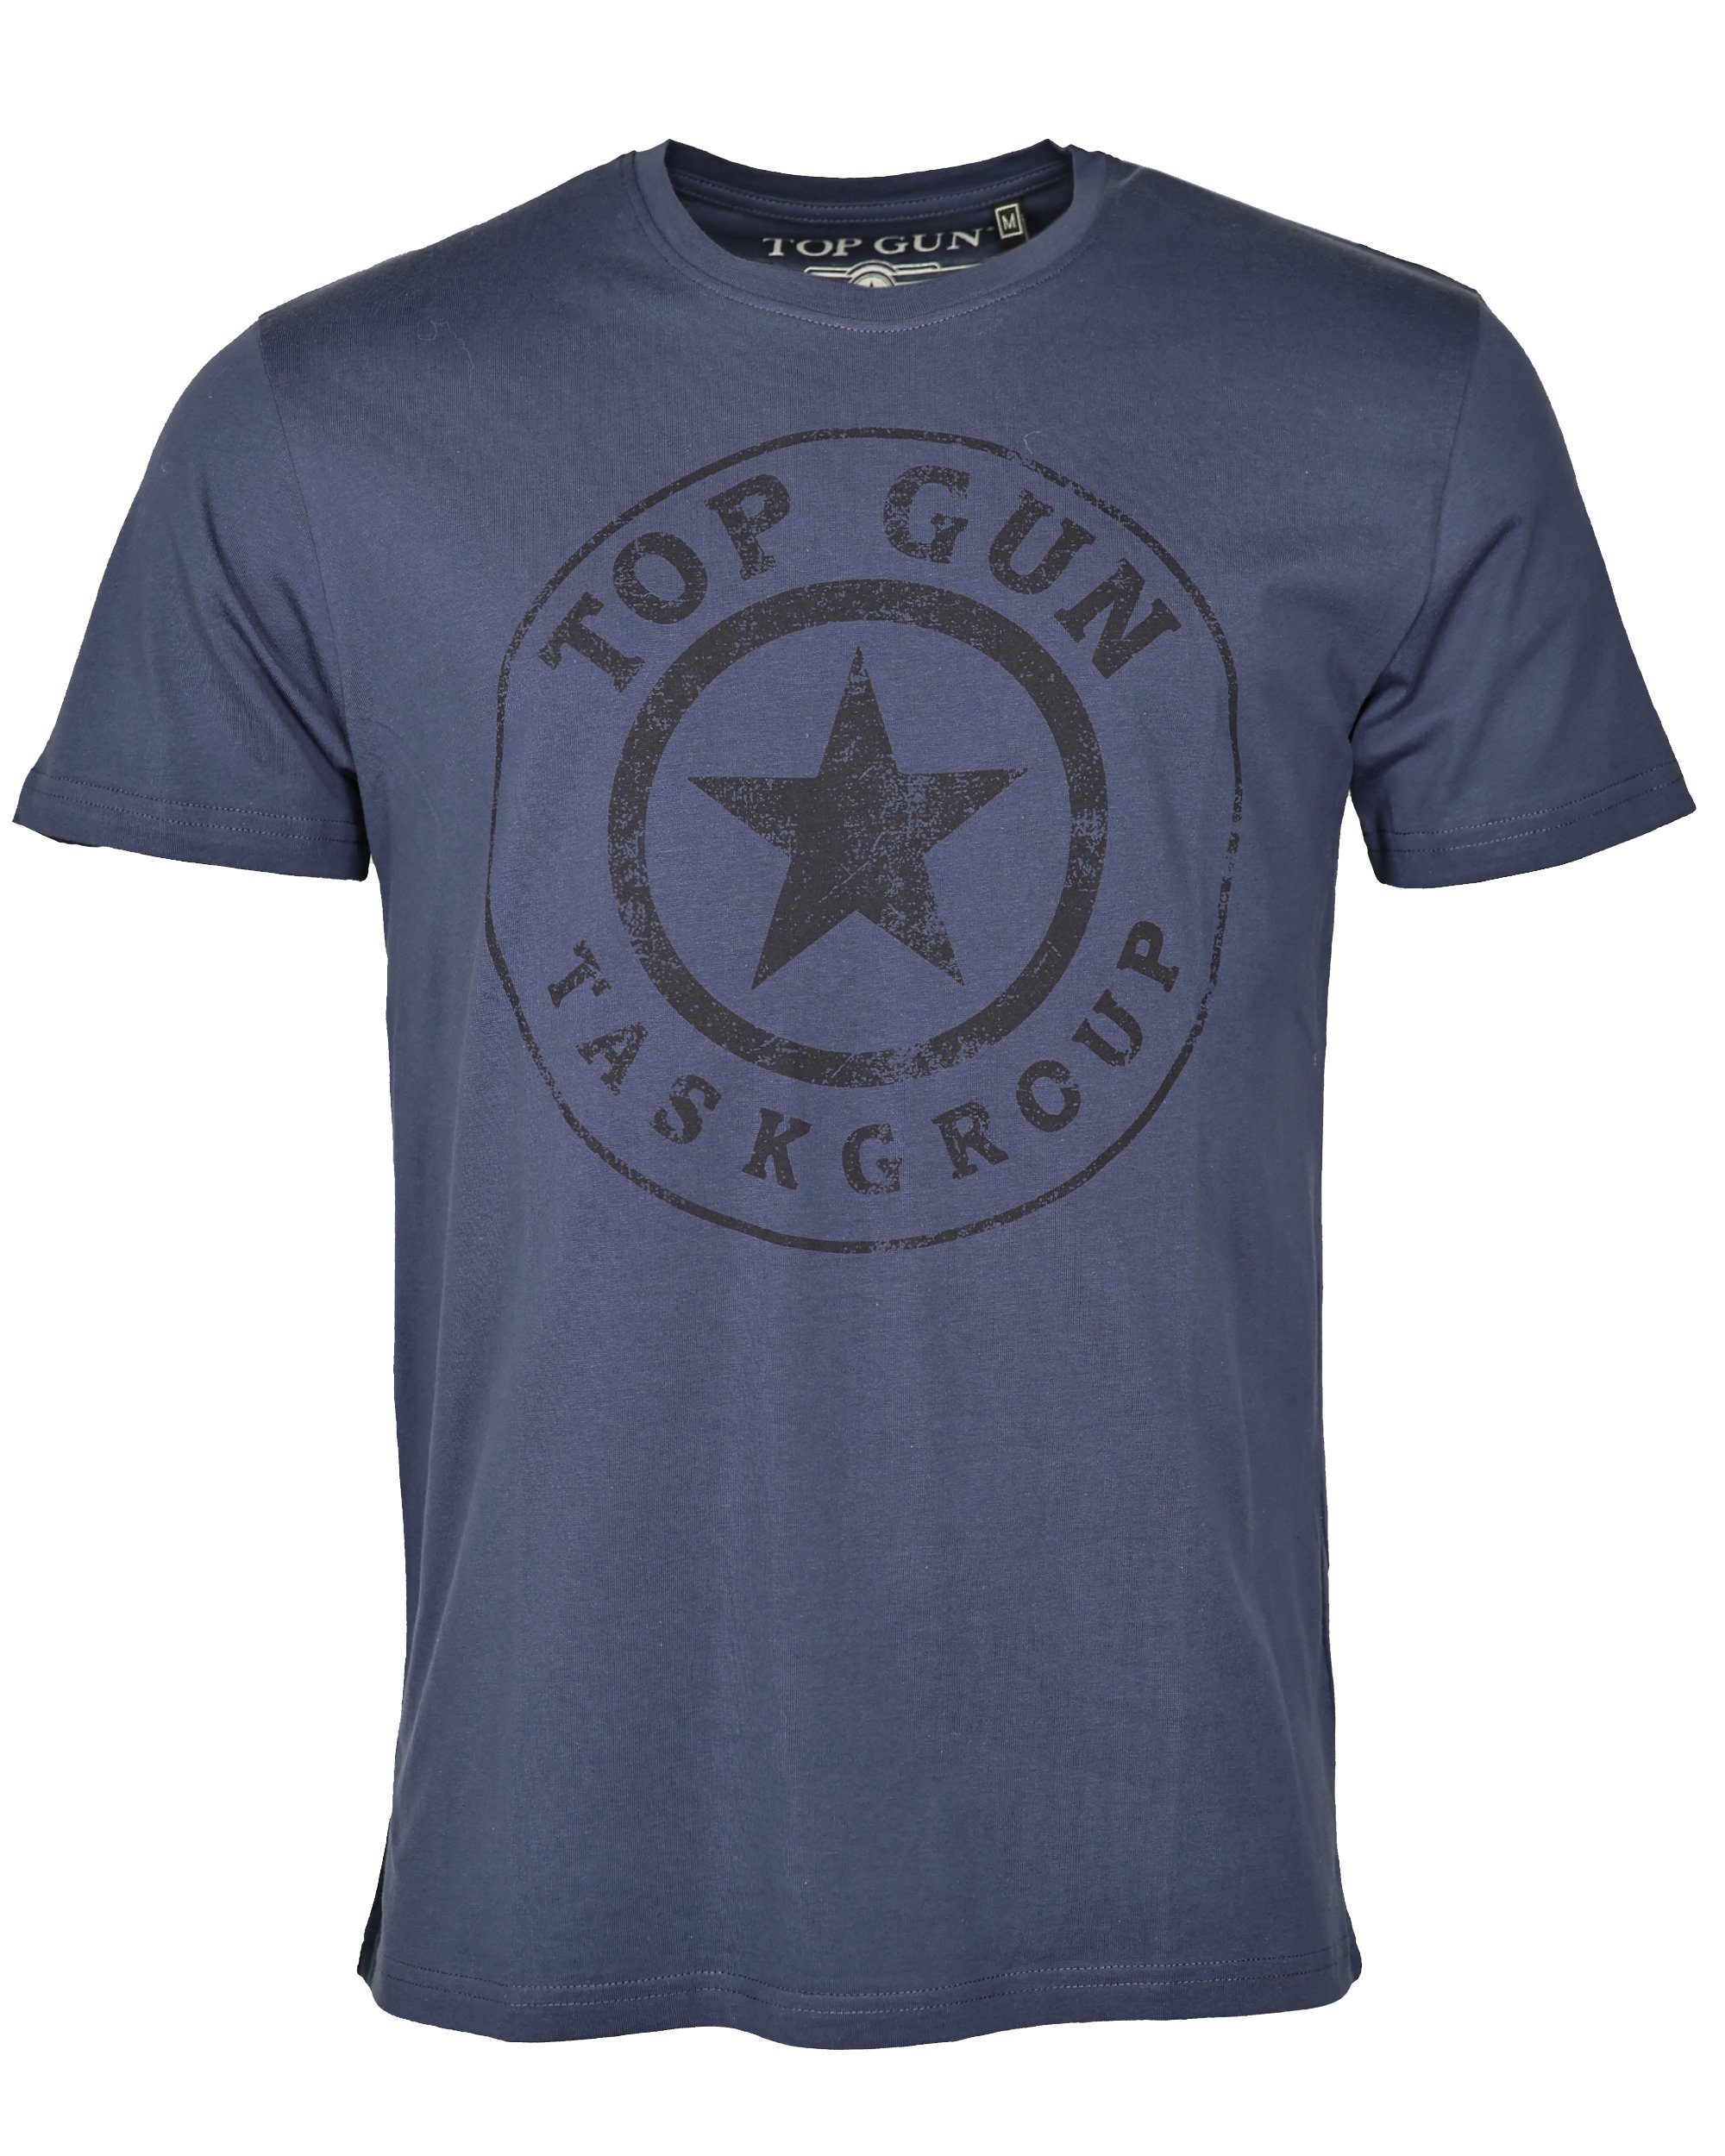 TOP GUN T-Shirt navy TG20212110